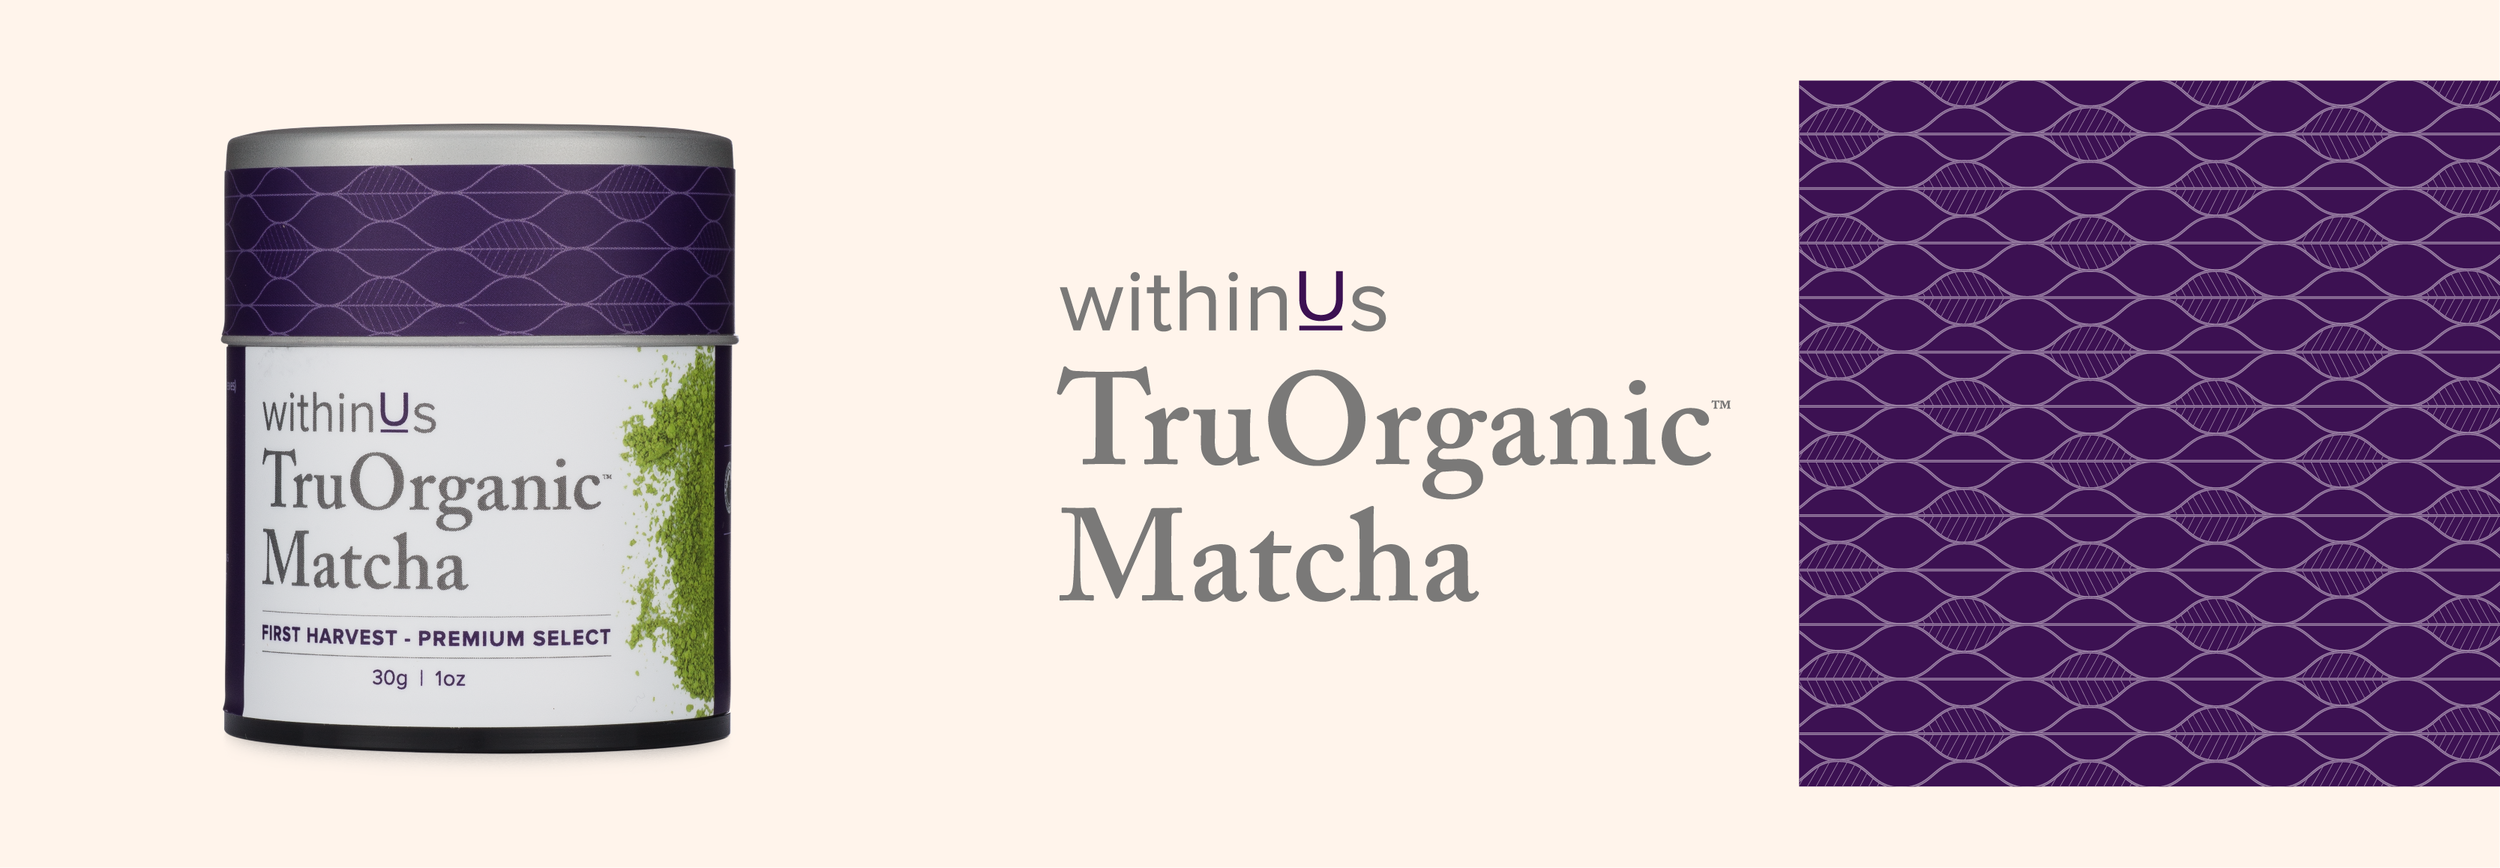 withinUs-Product-Design_TruOrganic_Matcha.png